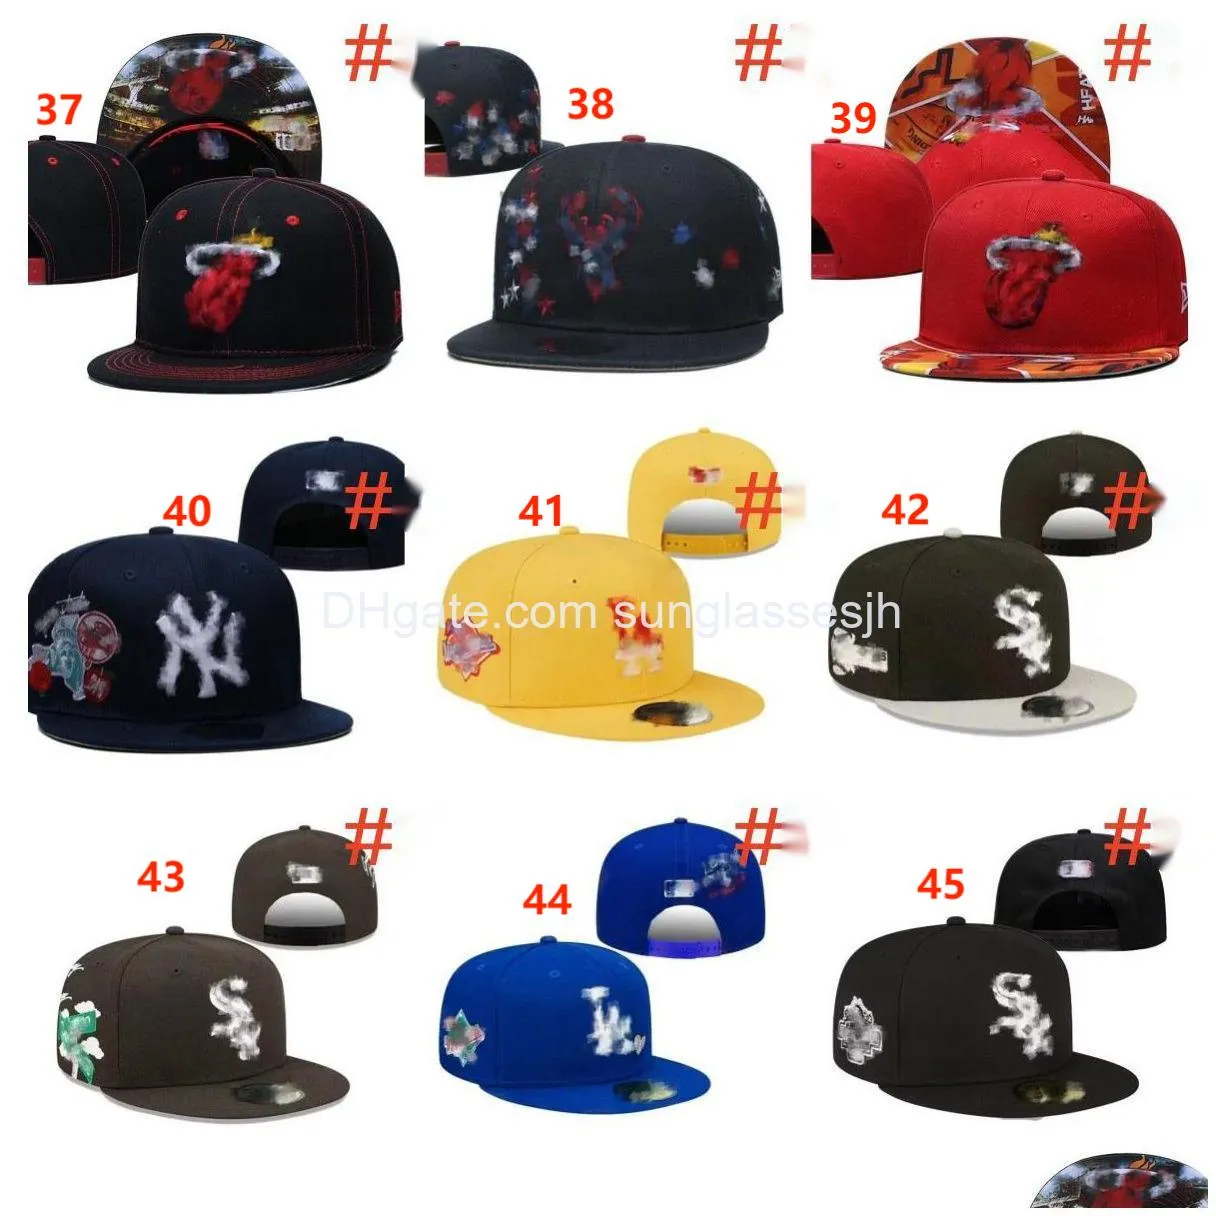 Ball Caps Top Quality Snapbacks Fitted Hats Embroidery Football Baskball Visors Cotton Letter Mesh Flex Beanies Flat Hat Hip Hop Spo